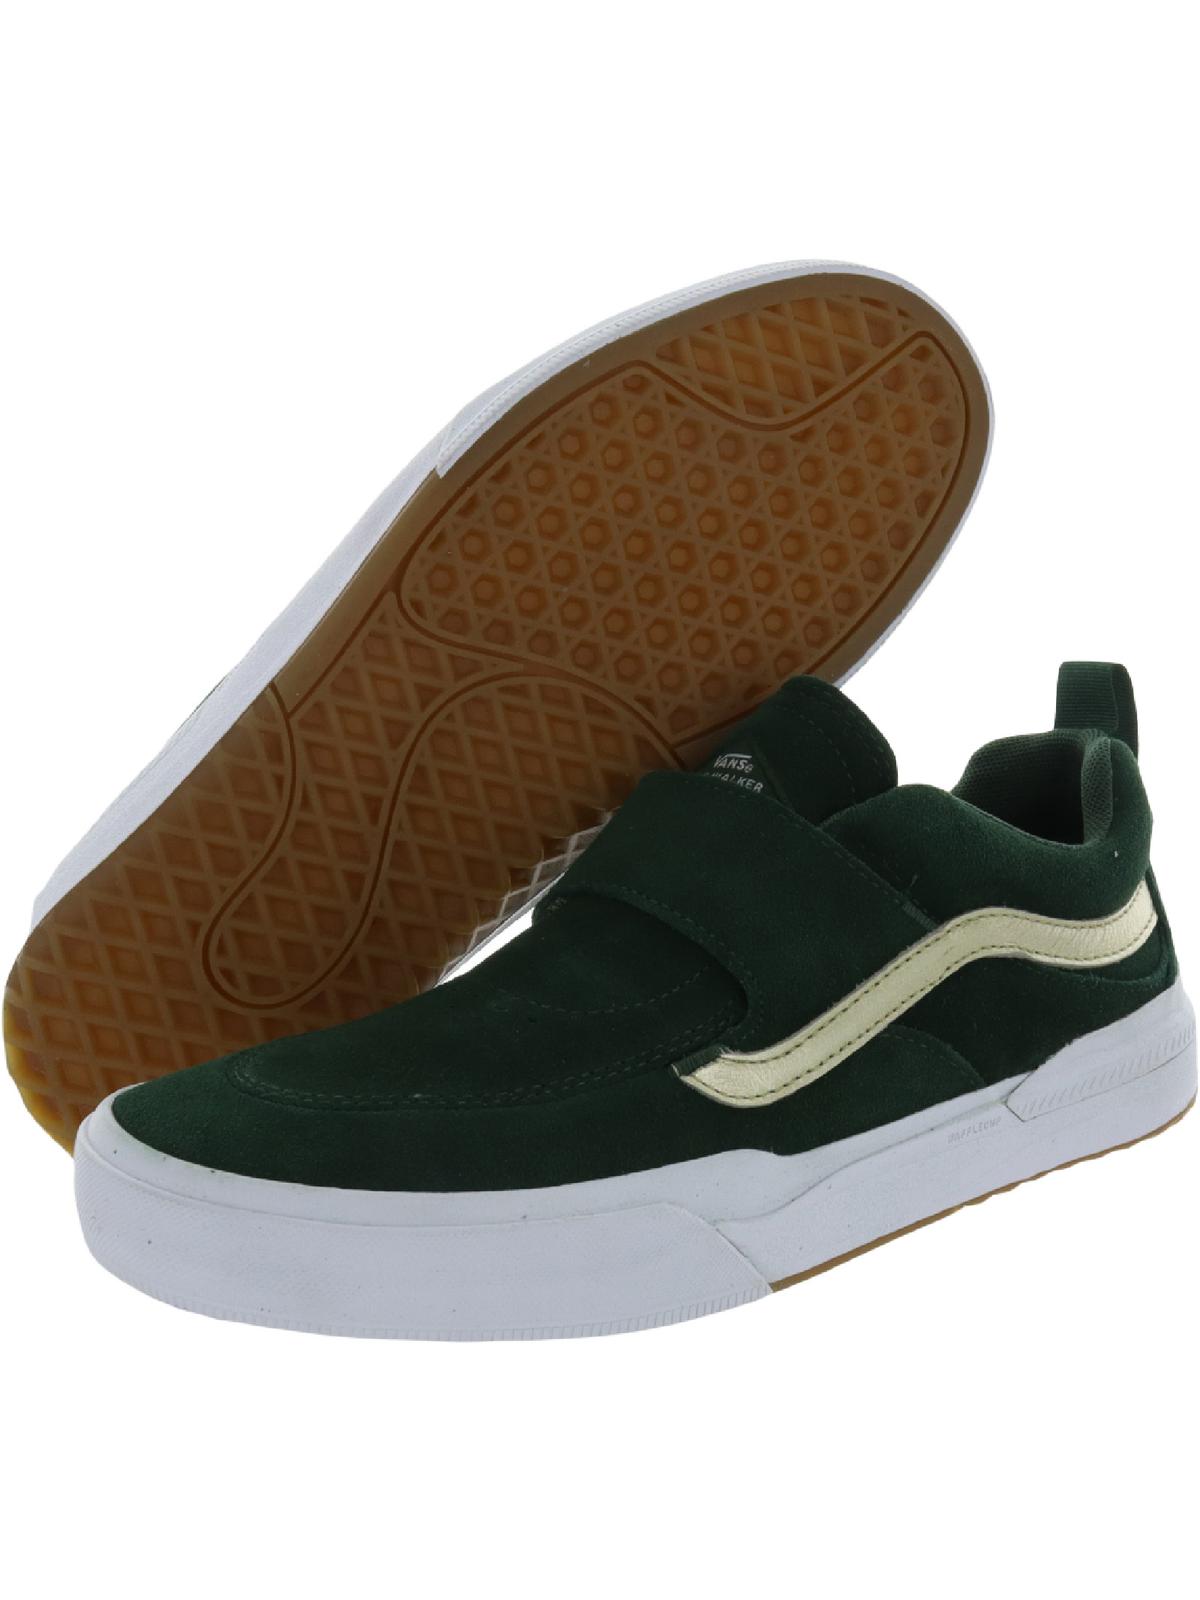 Vans Mens Kyle Pro 2 Suede Metallic Trim Skate Shoes Green 12 Medium (D) - image 2 of 3